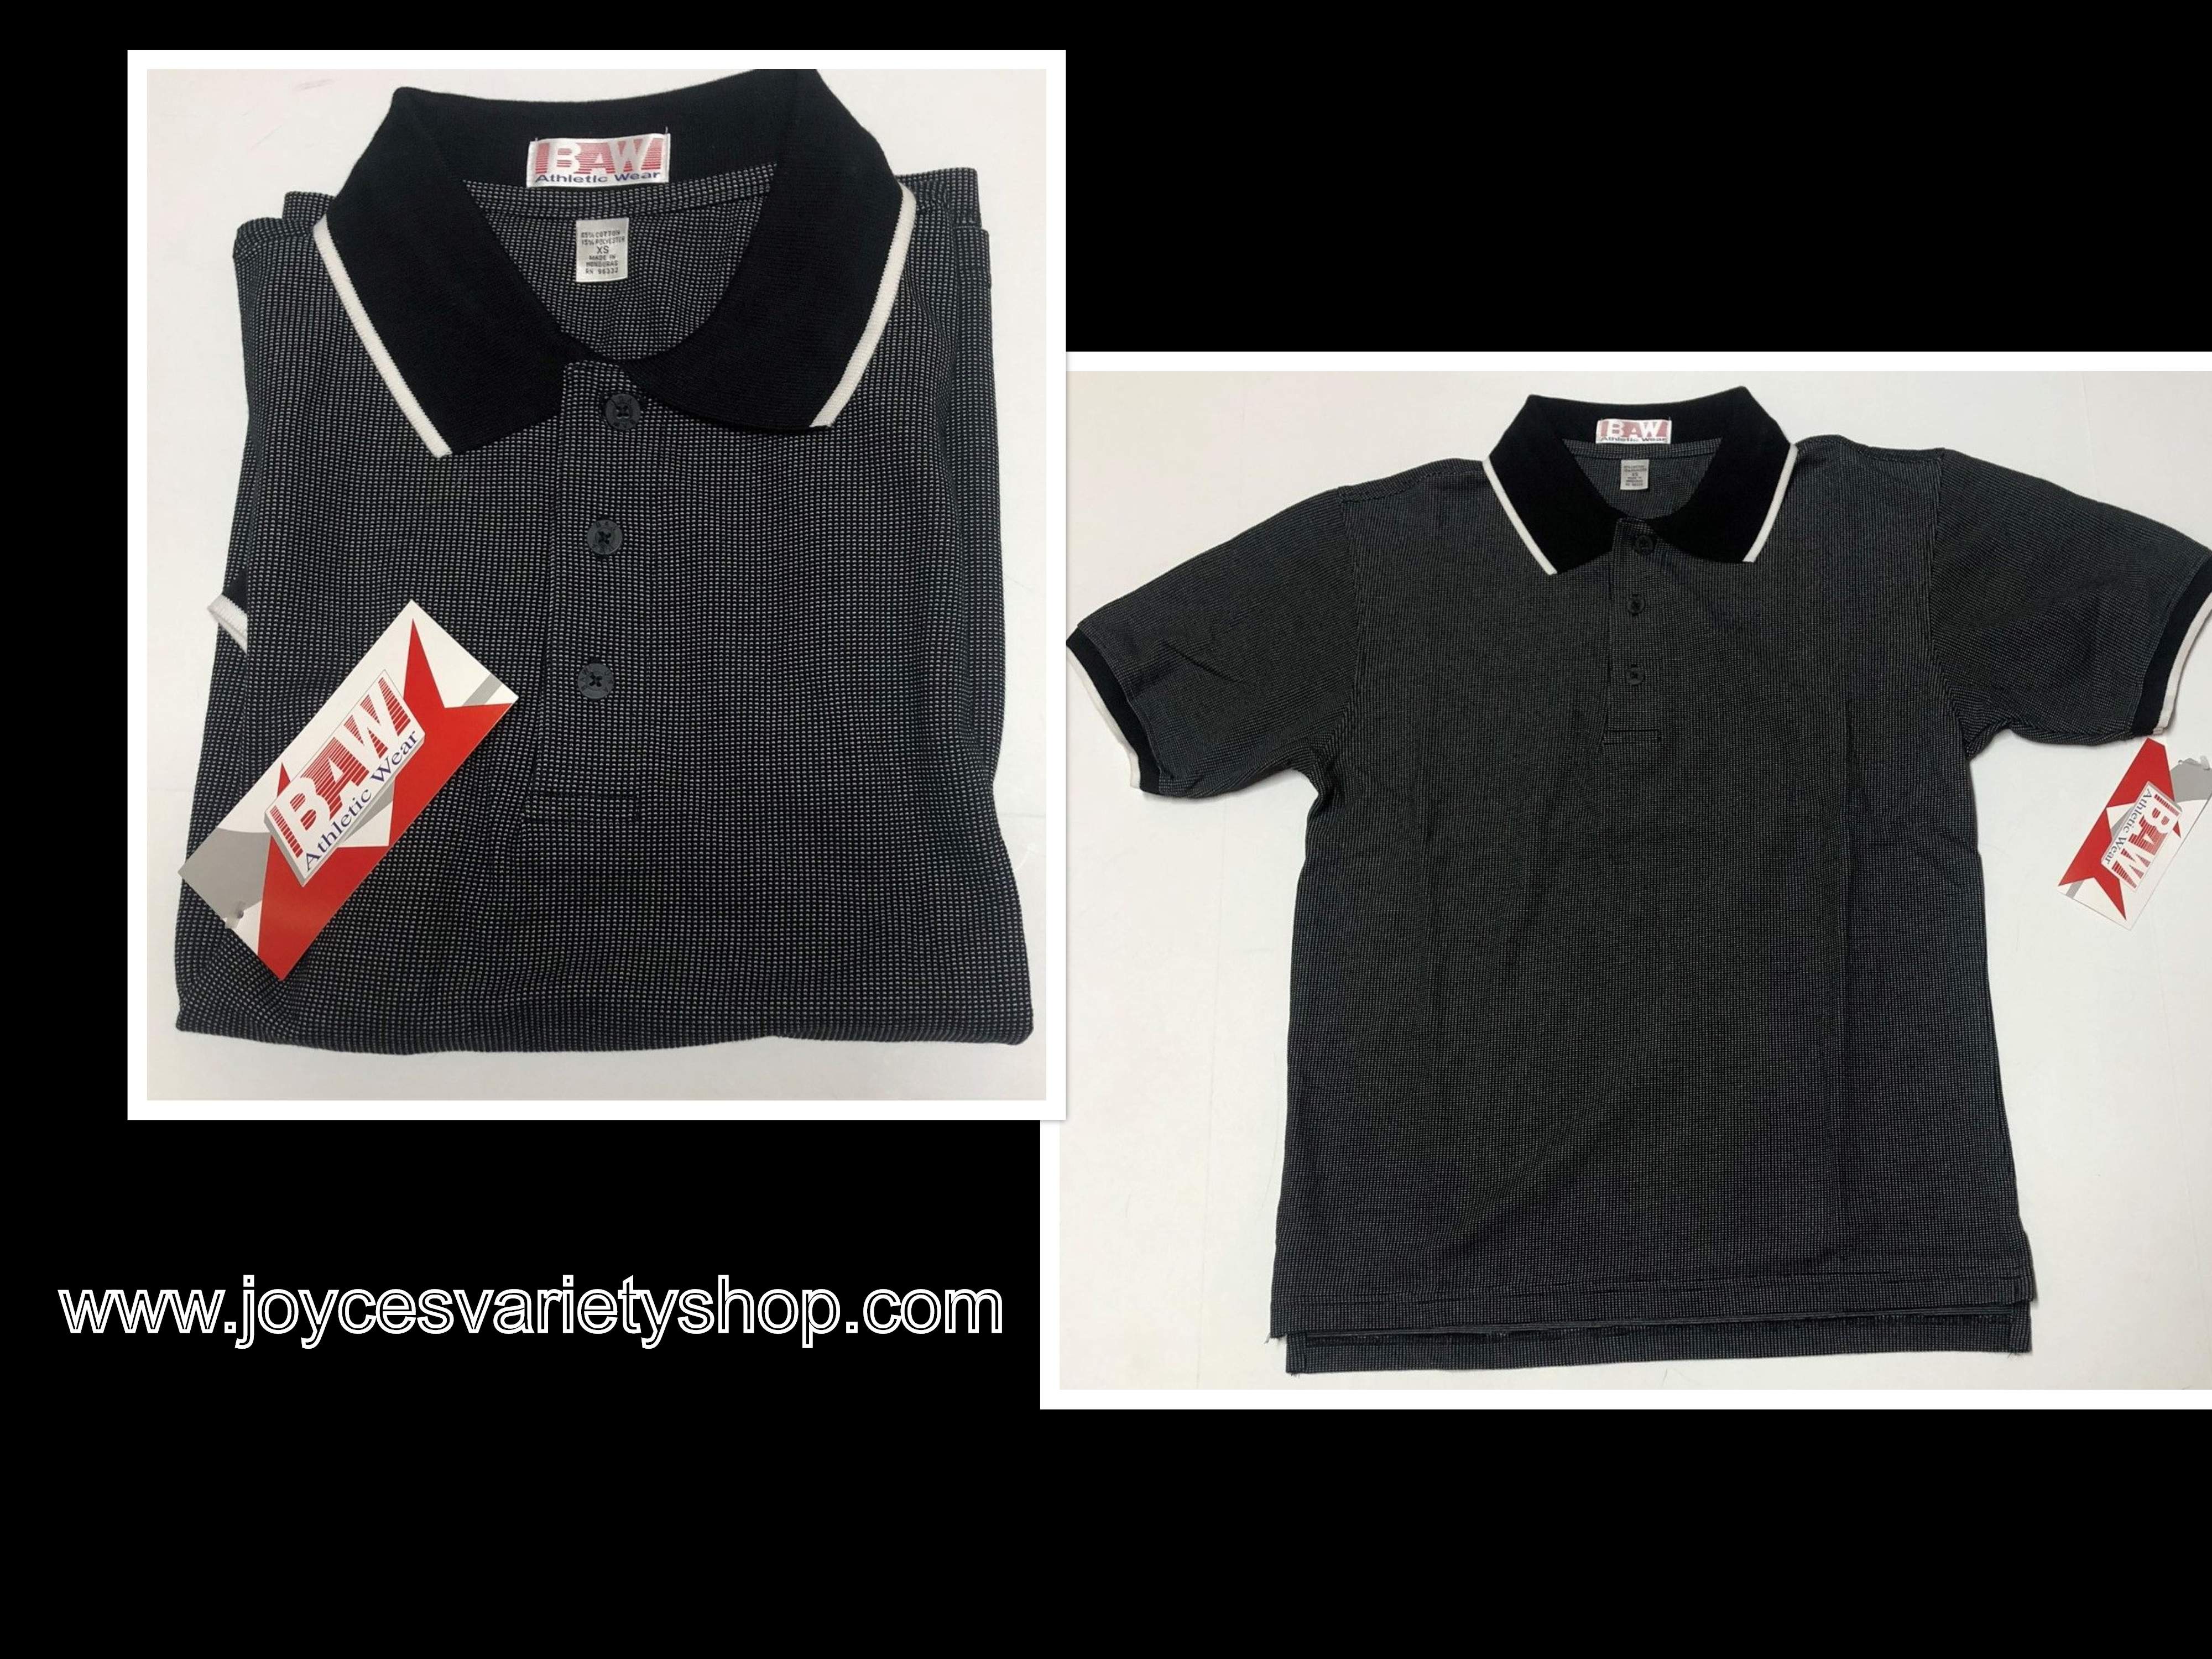 BAW Athletic Wear Polo Shirt Men's XS Black & White Short Sleeve